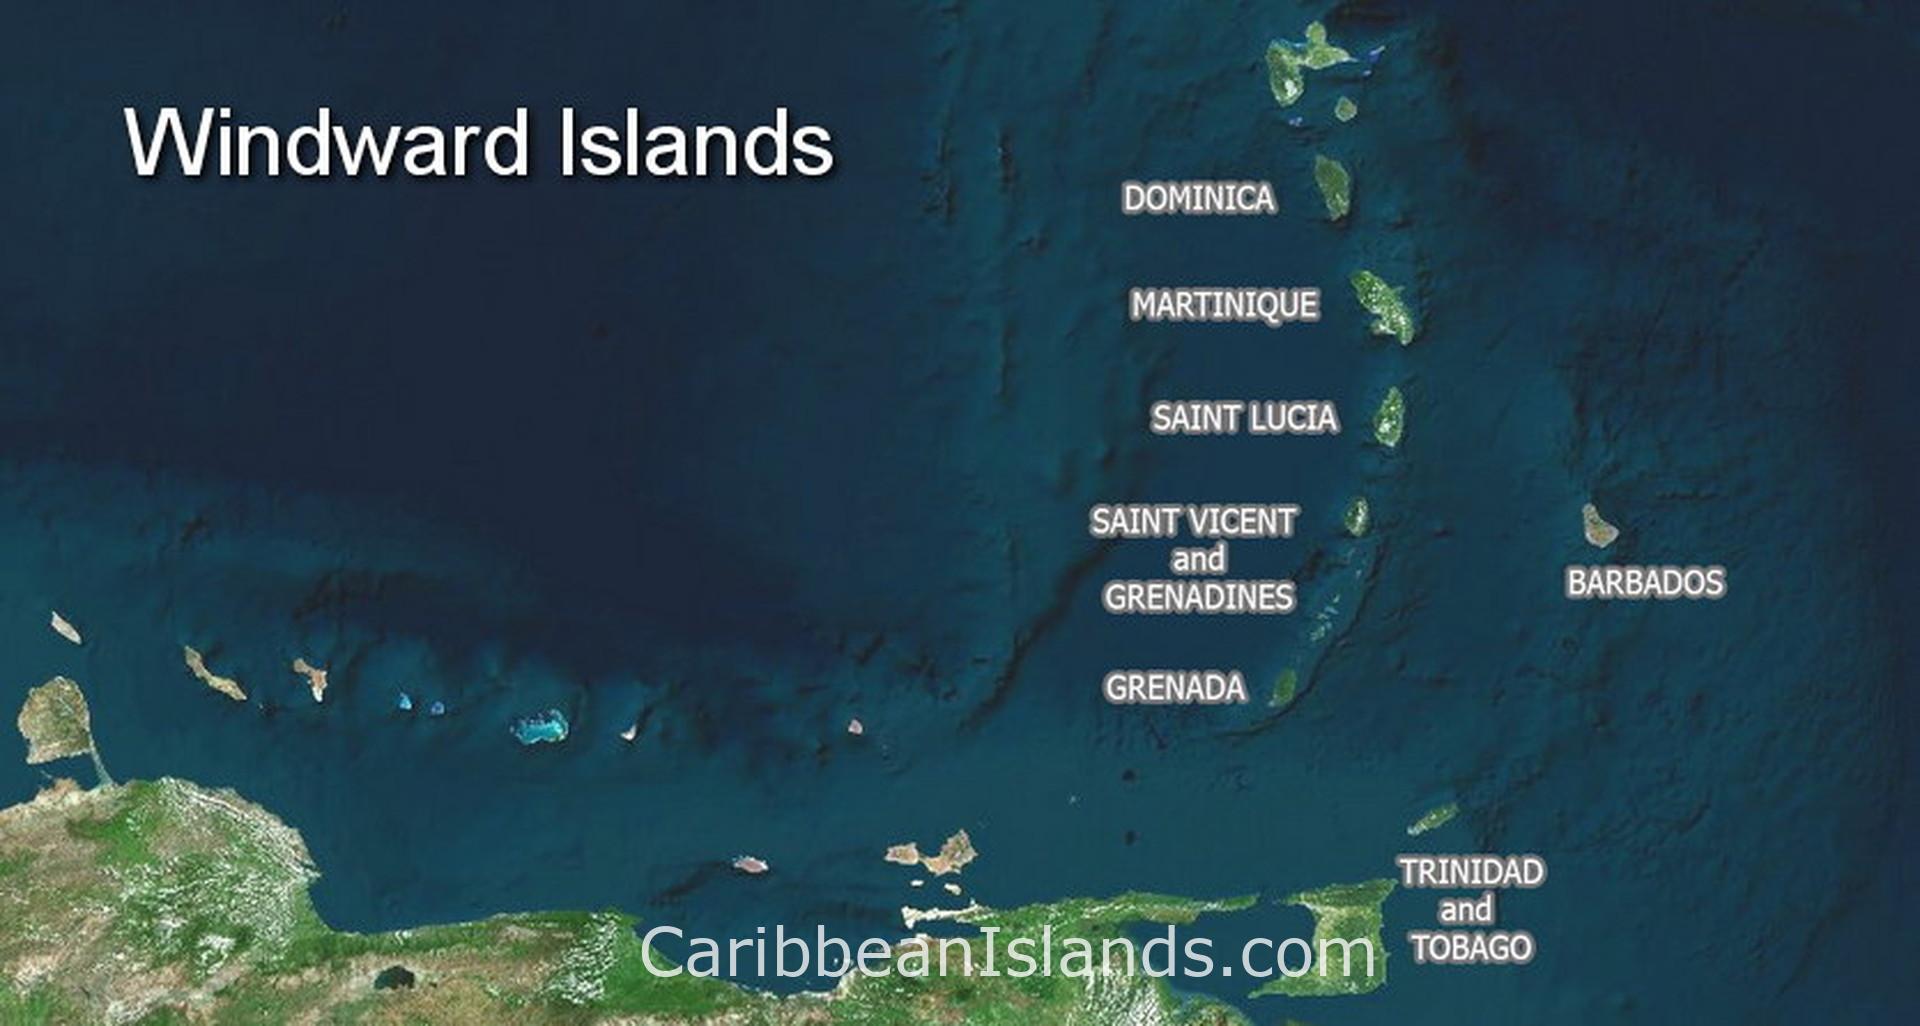 The Windward Islands